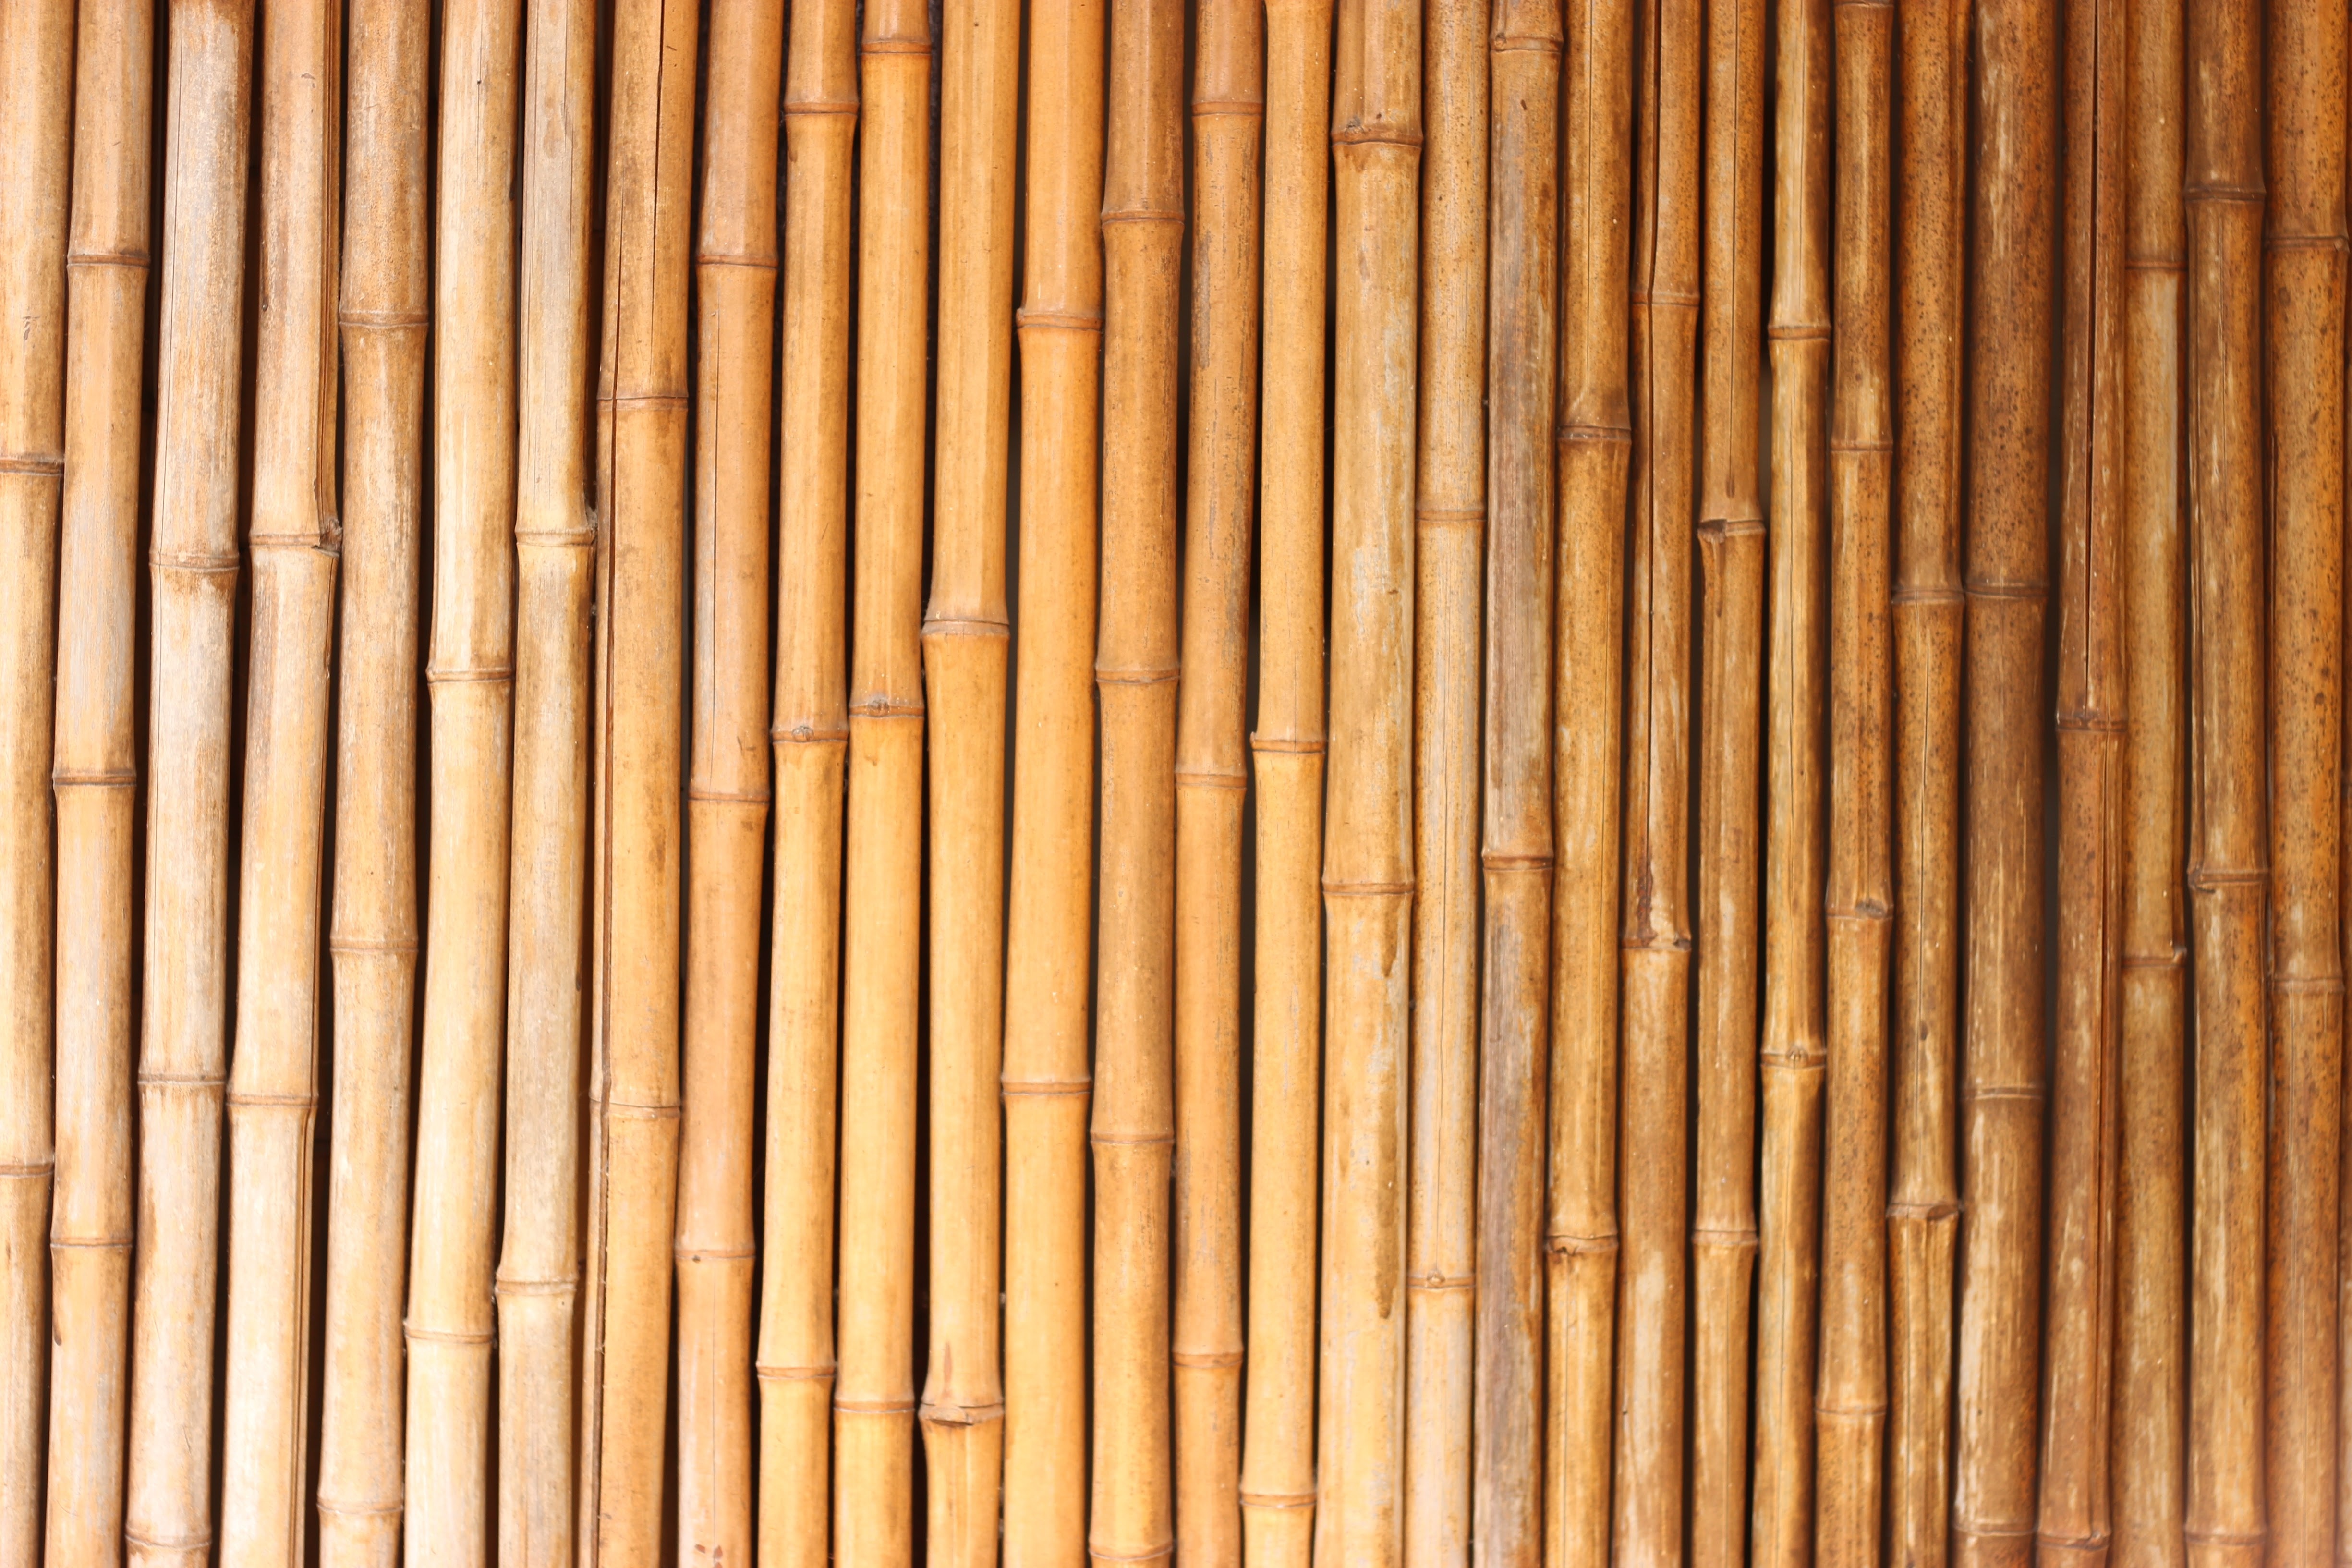 Bamboo Texture Wall Free Image